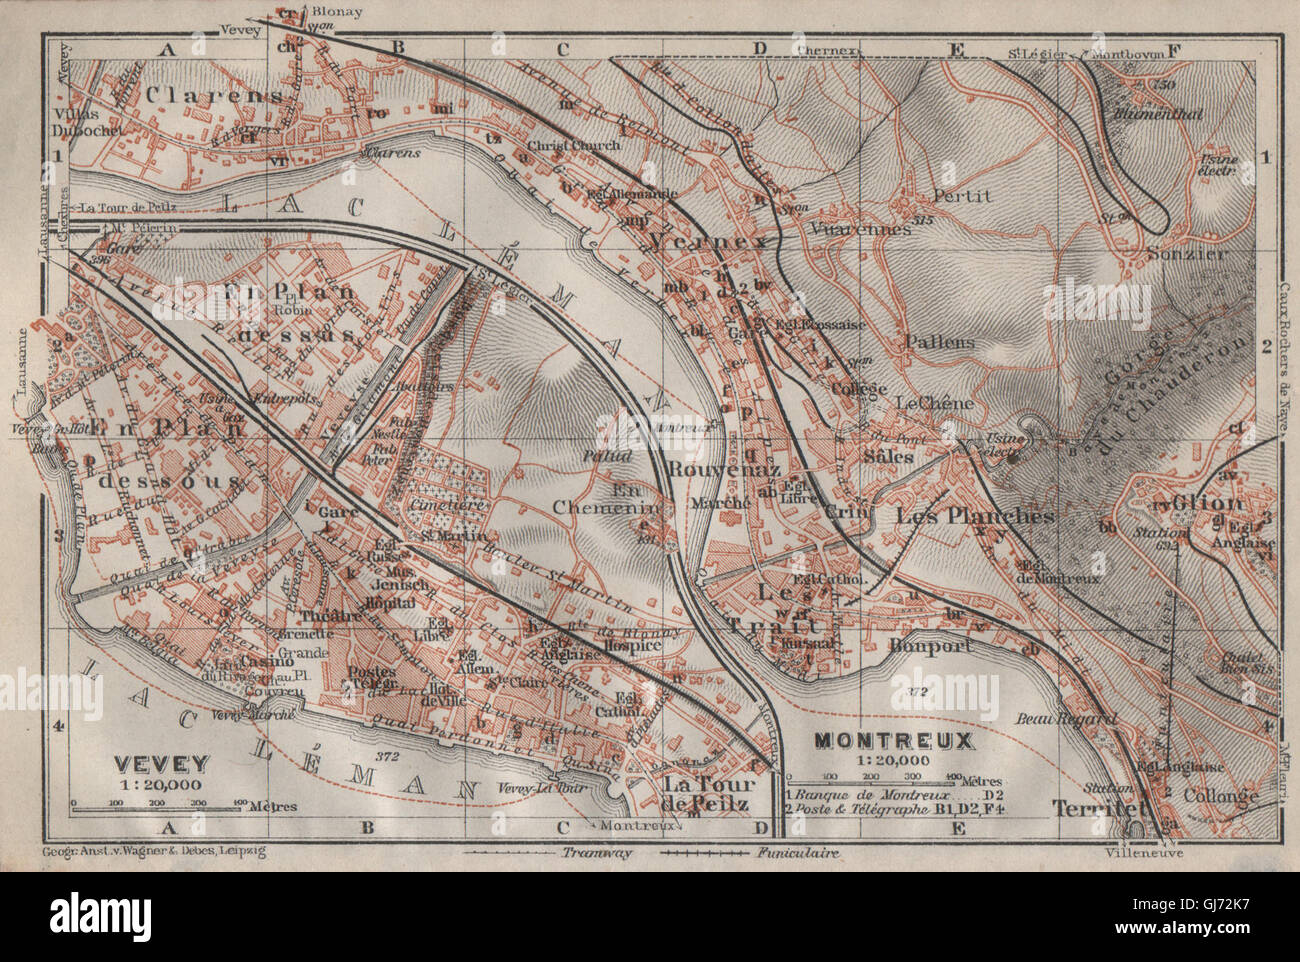 MONTREUX. VEVEY. Clarens. town city plan. Switzerland Suisse Schweiz, 1911  map Stock Photo - Alamy